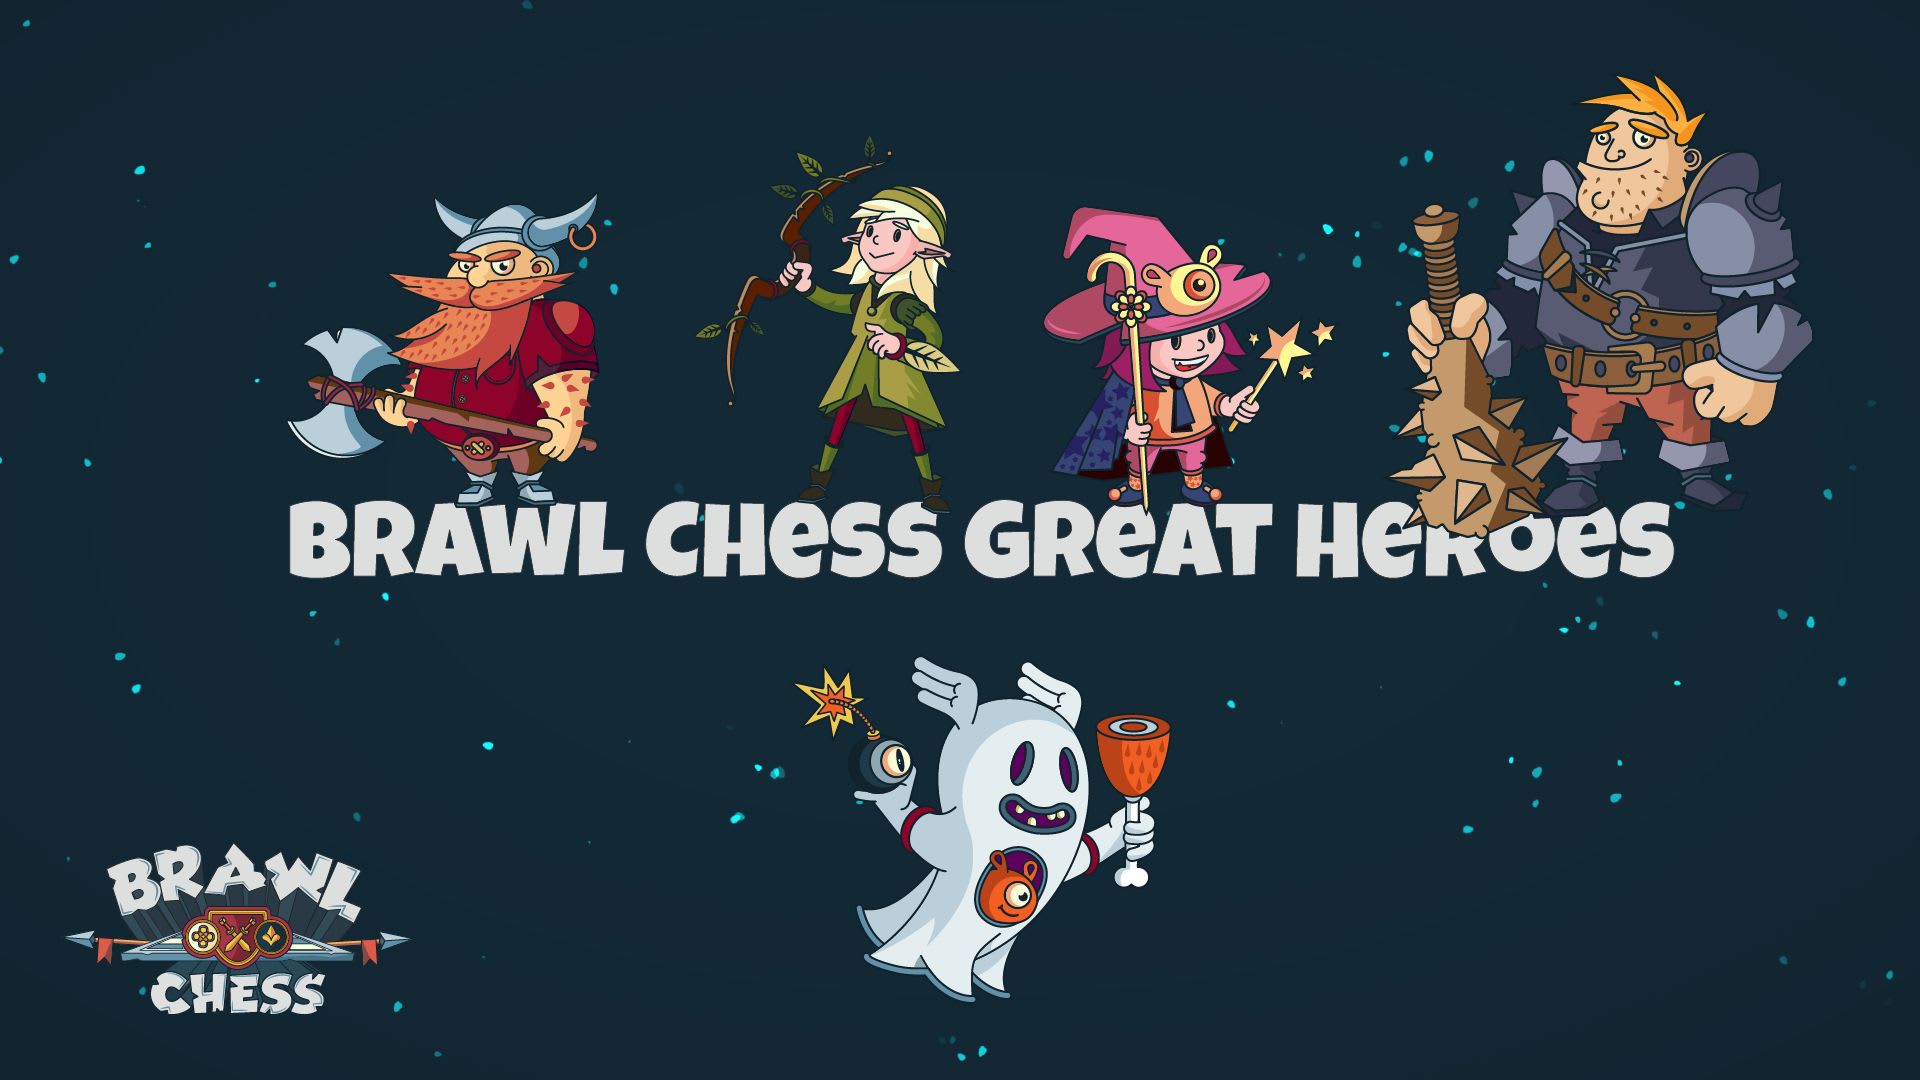 Brawl Chess - Great Heroes